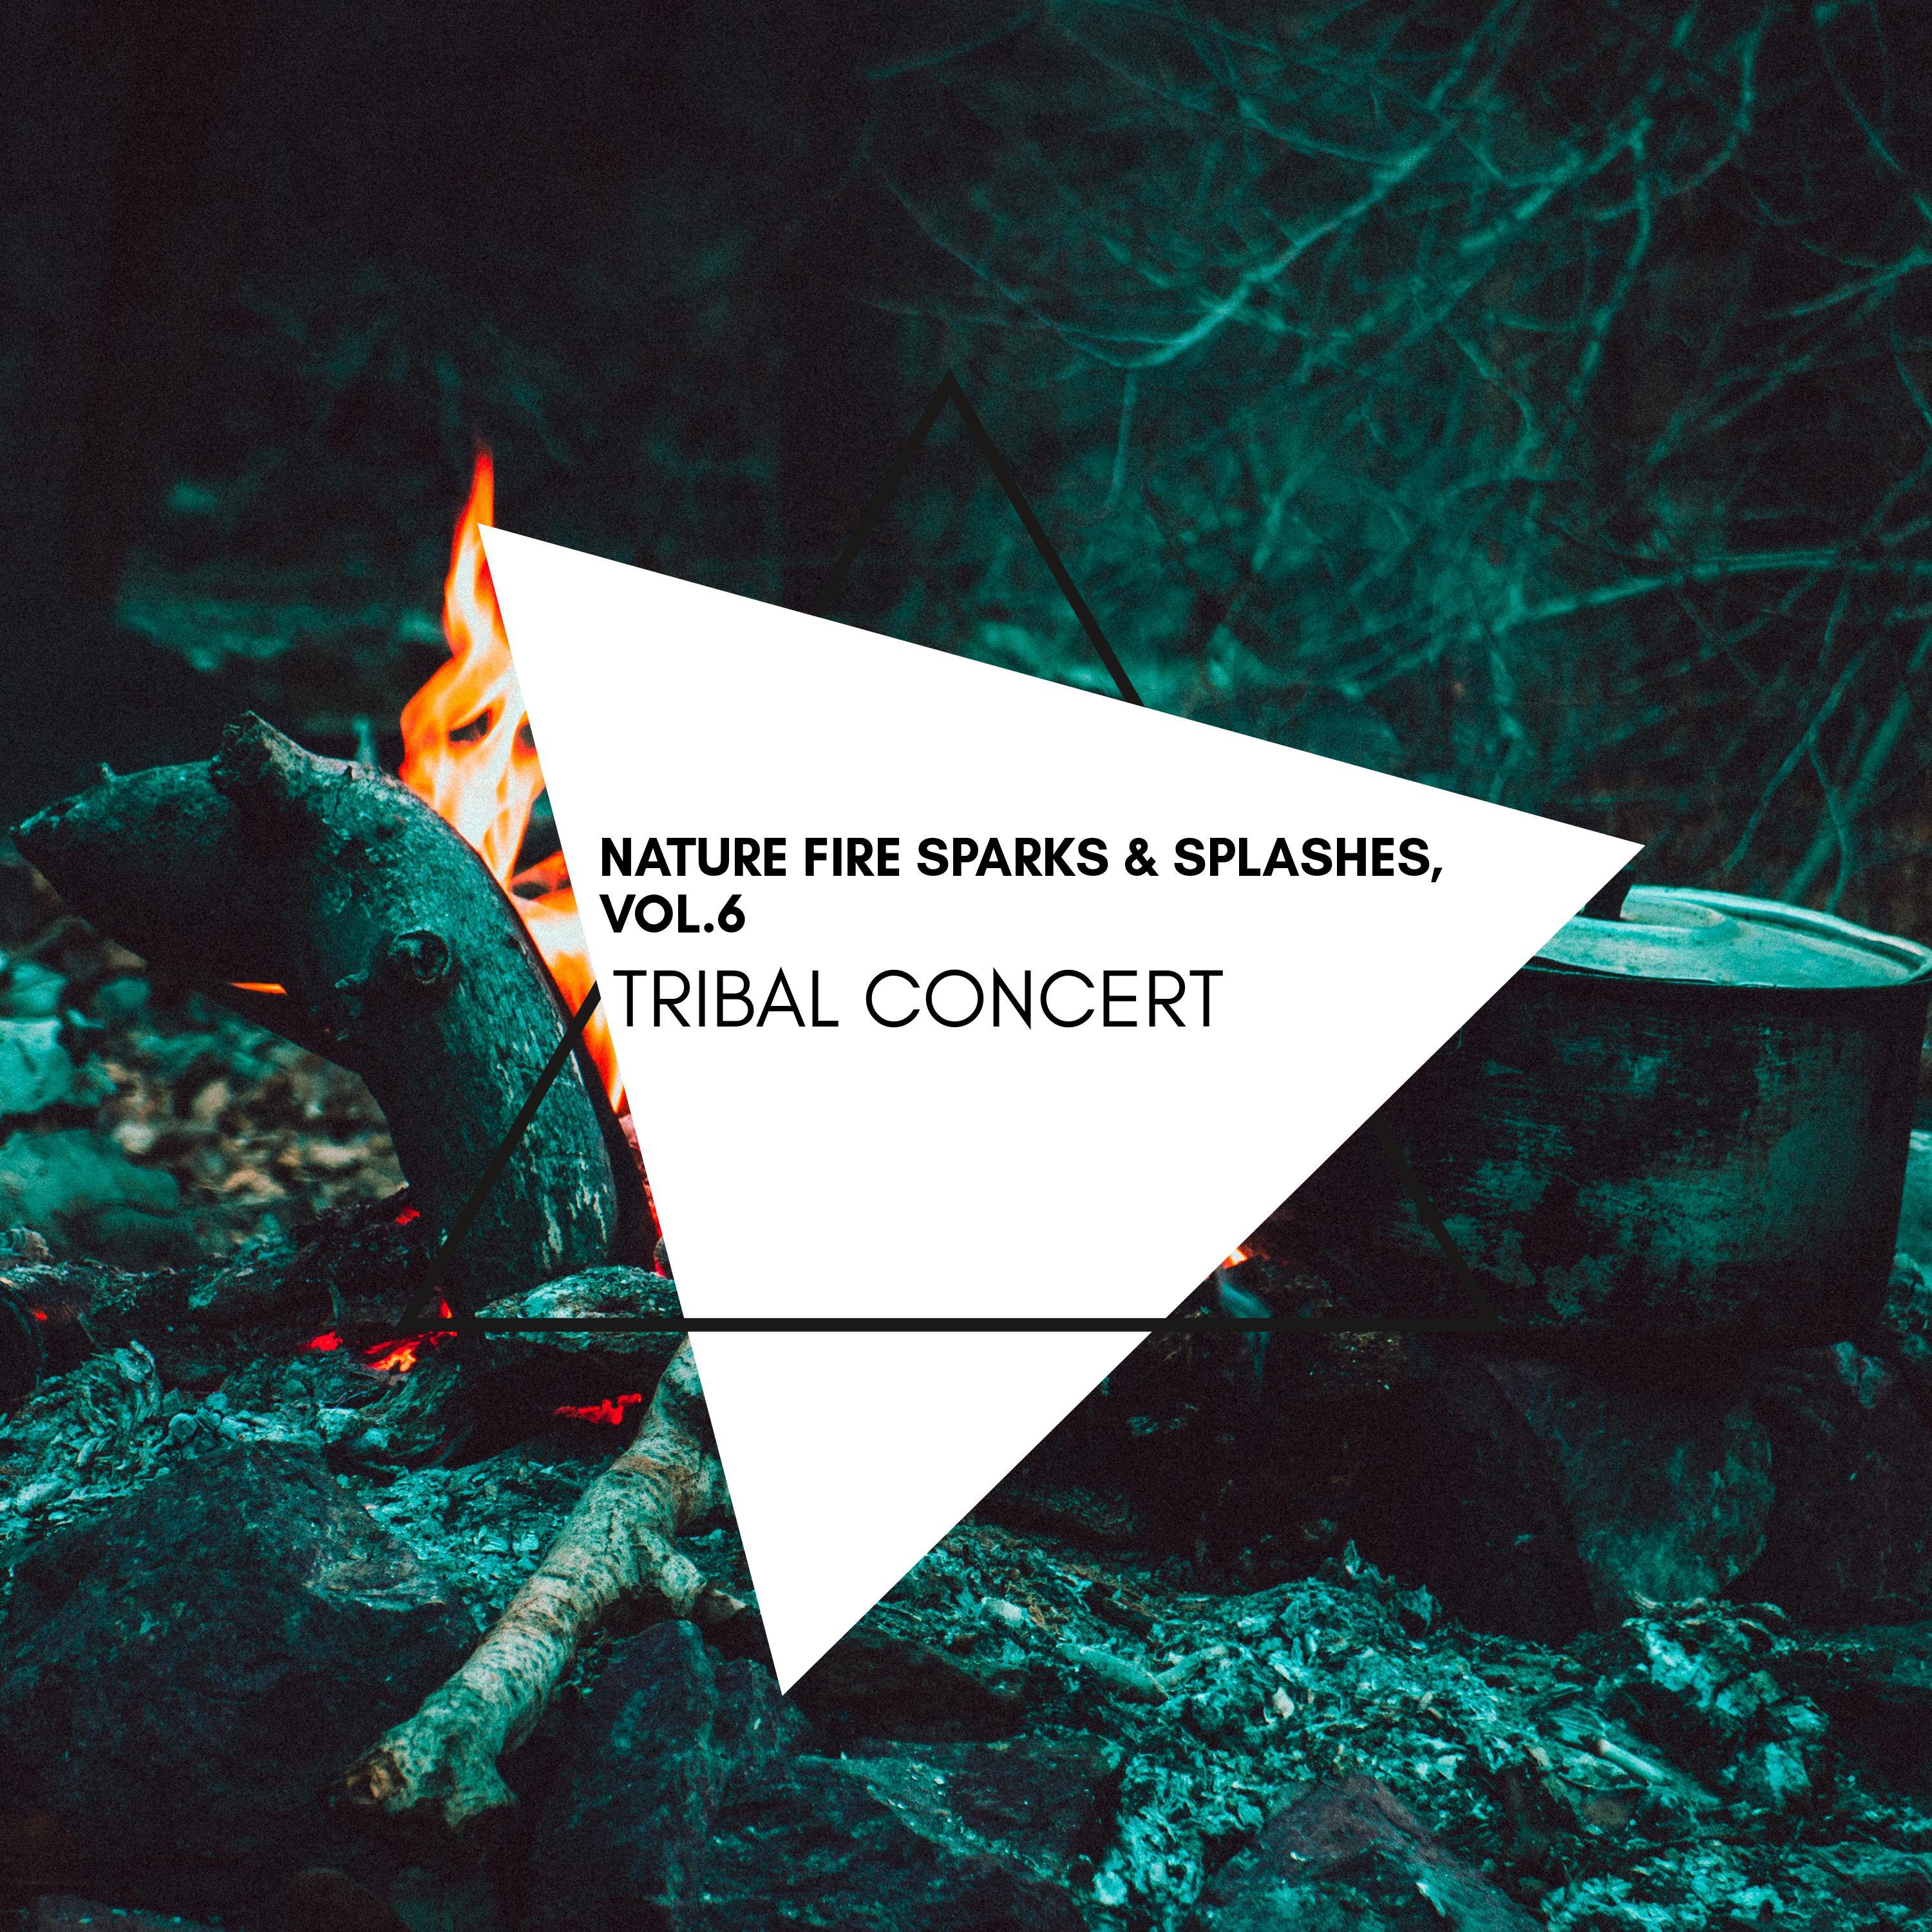 Organica Flames 9D Fire Sound - The Fire Blaze and Woodland